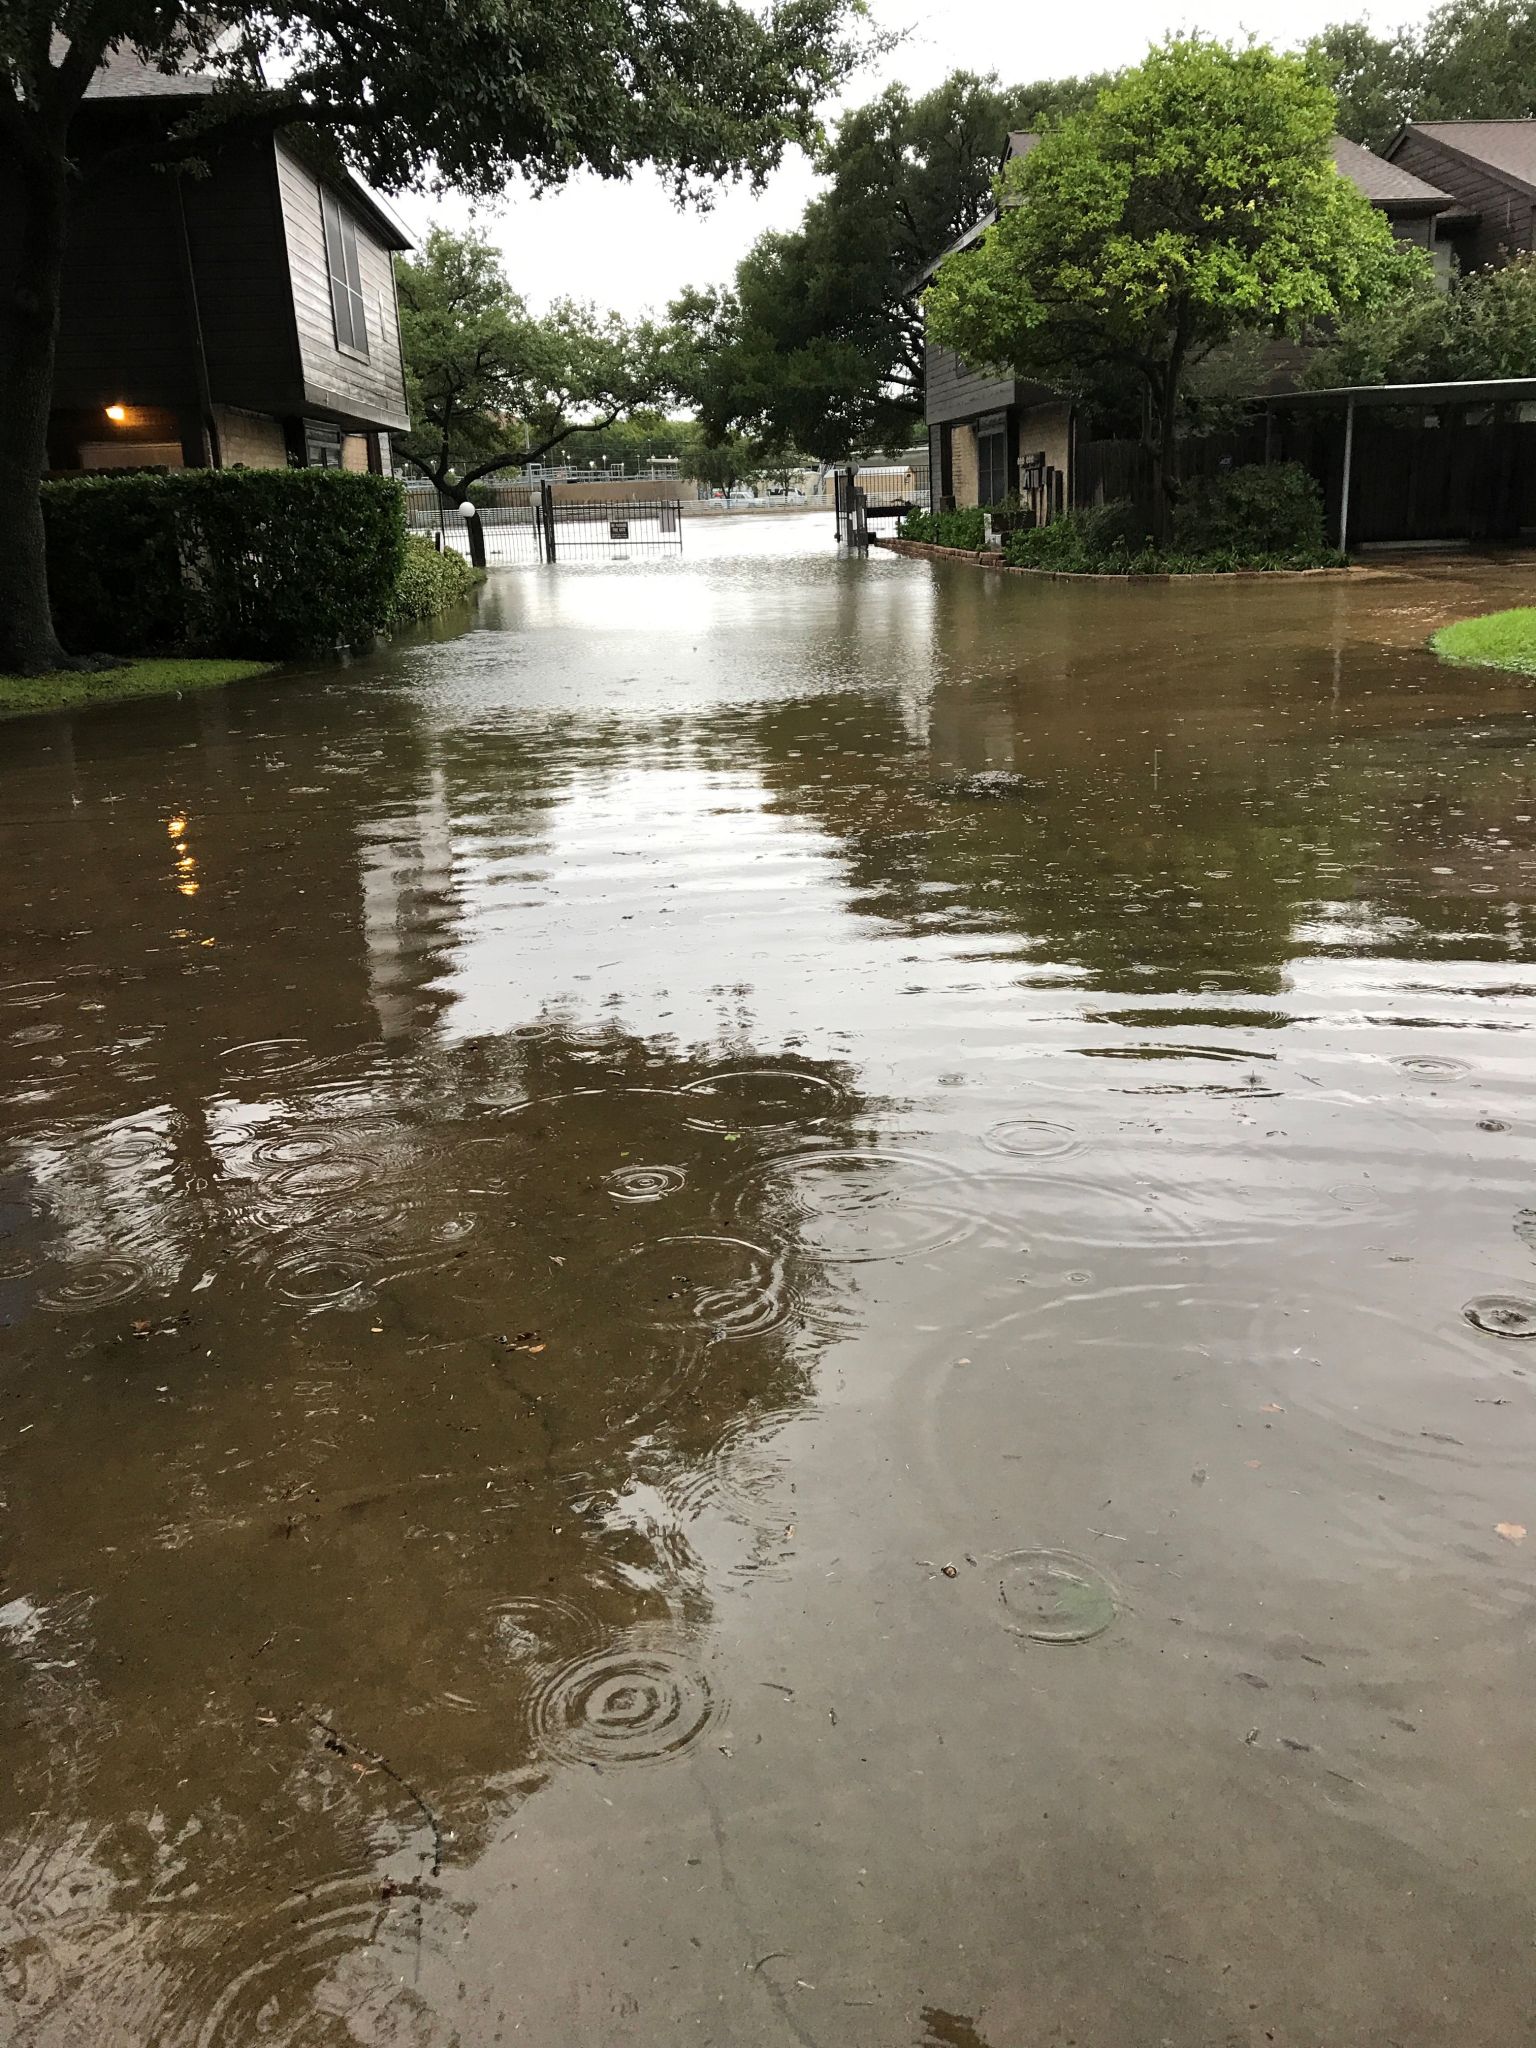 Harvey's floods will sink Houston home values - Houston Chronicle1536 x 2048